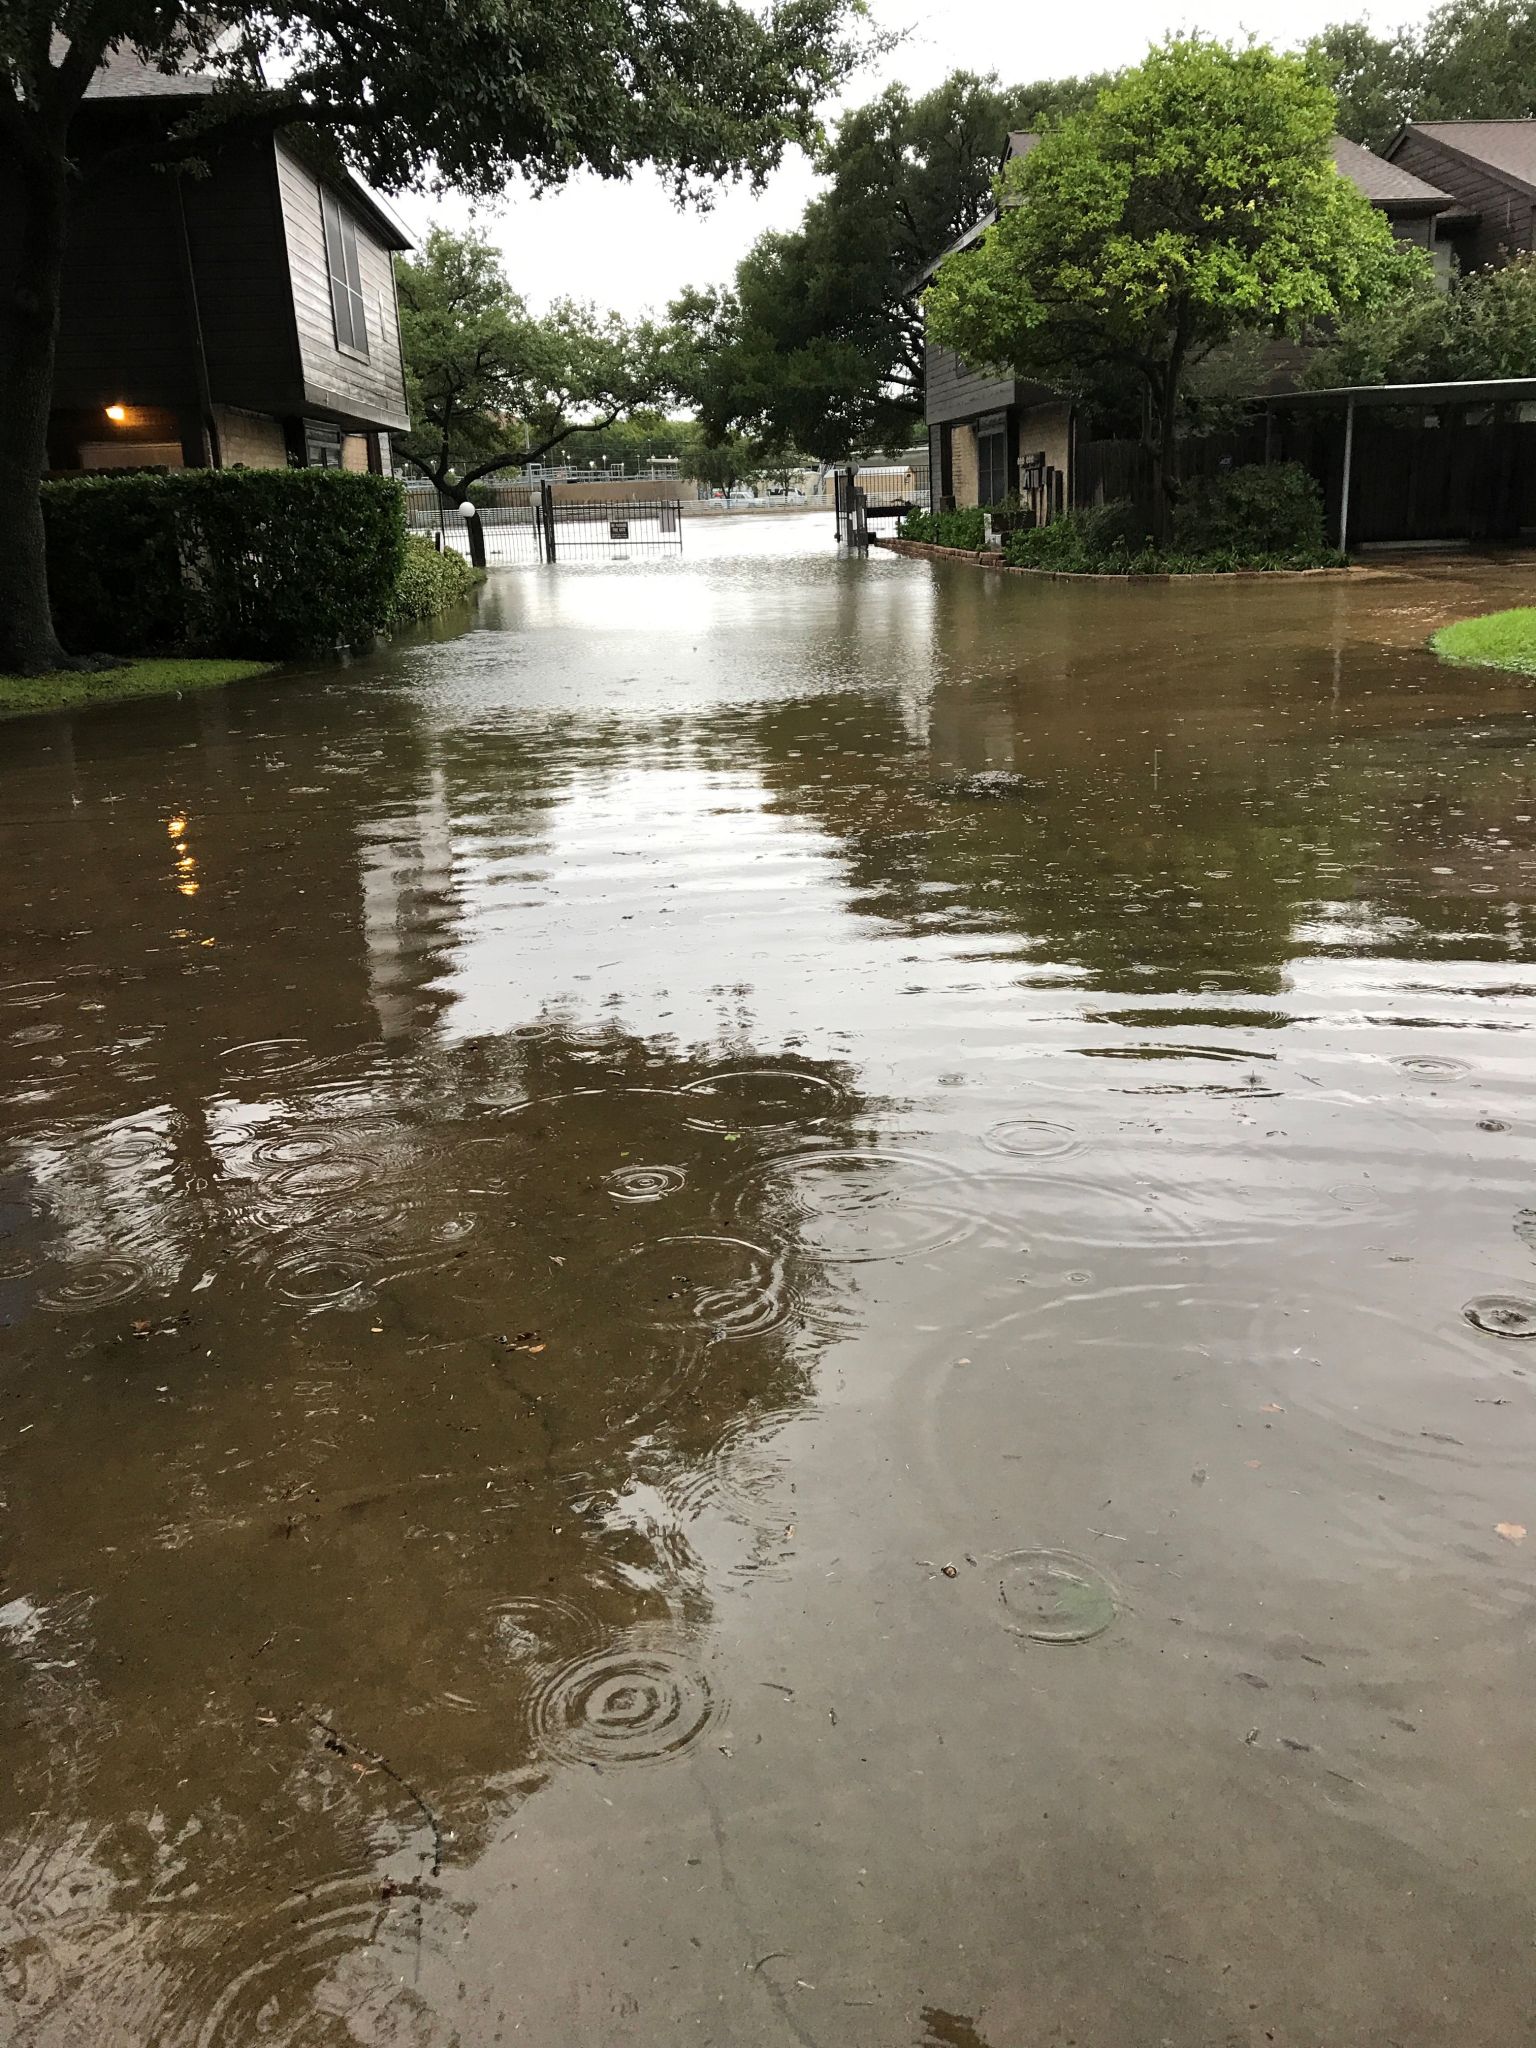 Harvey's floods will sink Houston home values - Houston Chronicle1536 x 2048